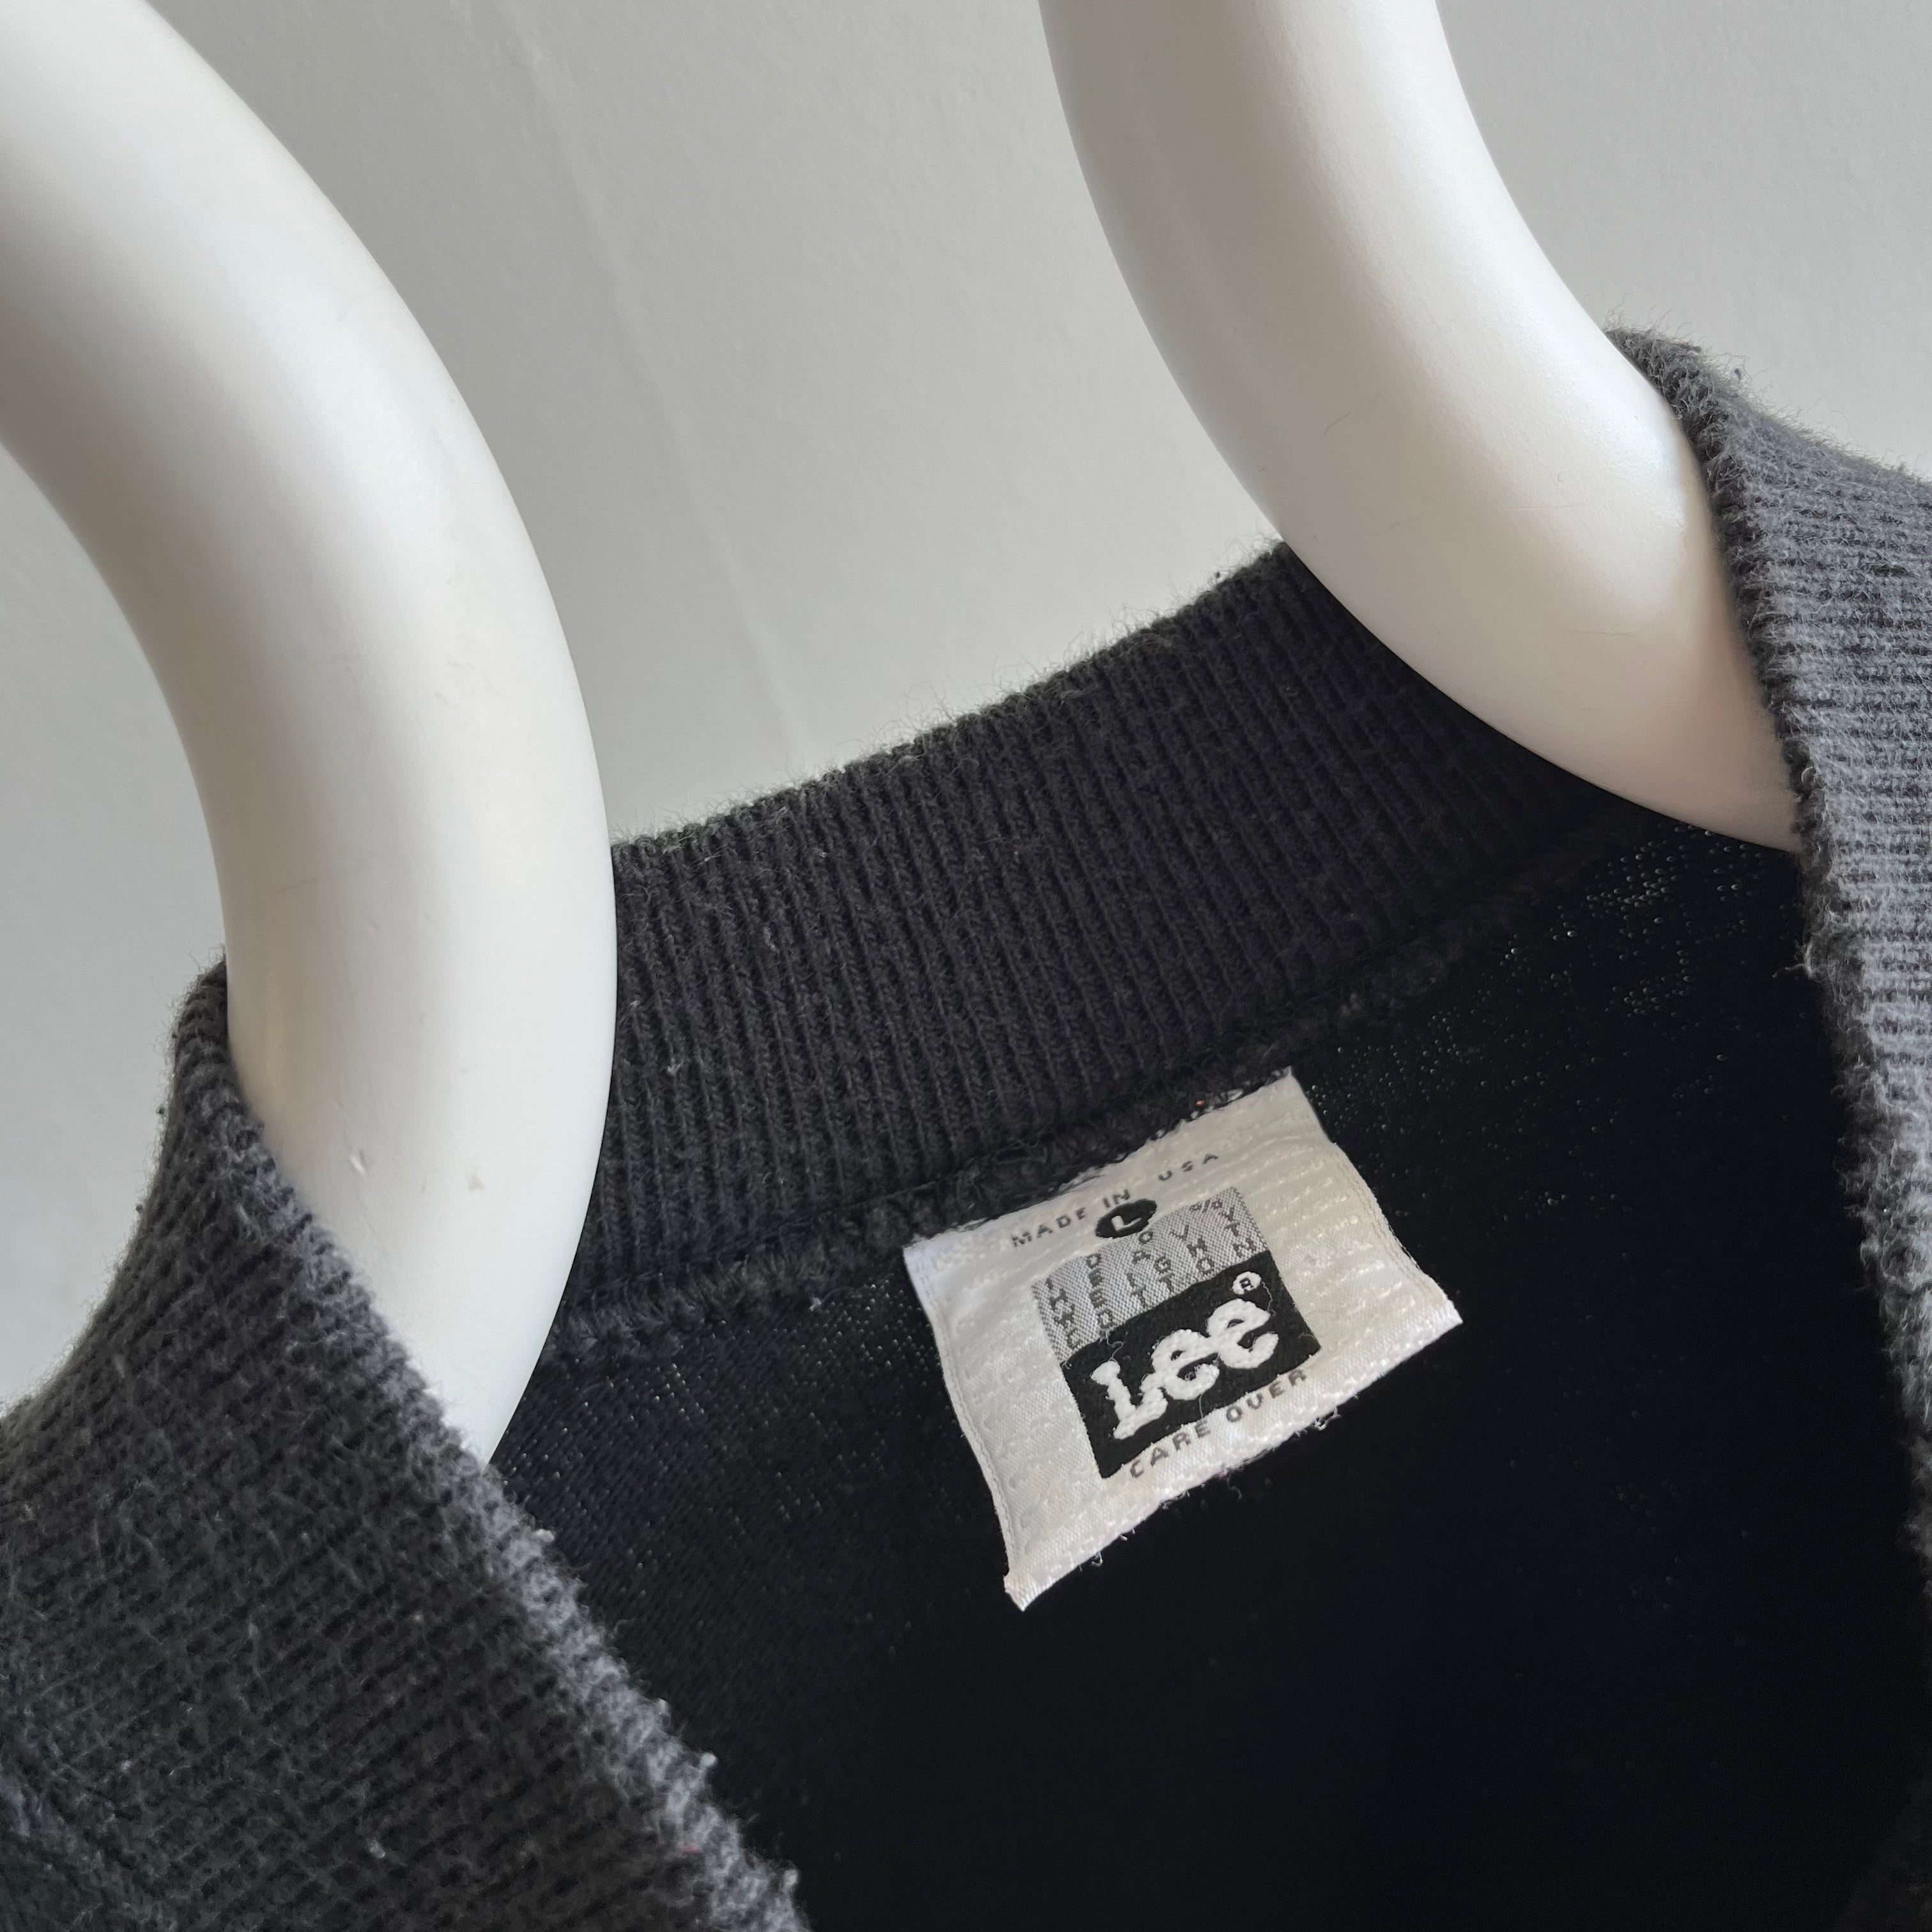 1980/90s 100% Cotton/USA Made Blank Black Mock Neck Shirt/Sweatshirt